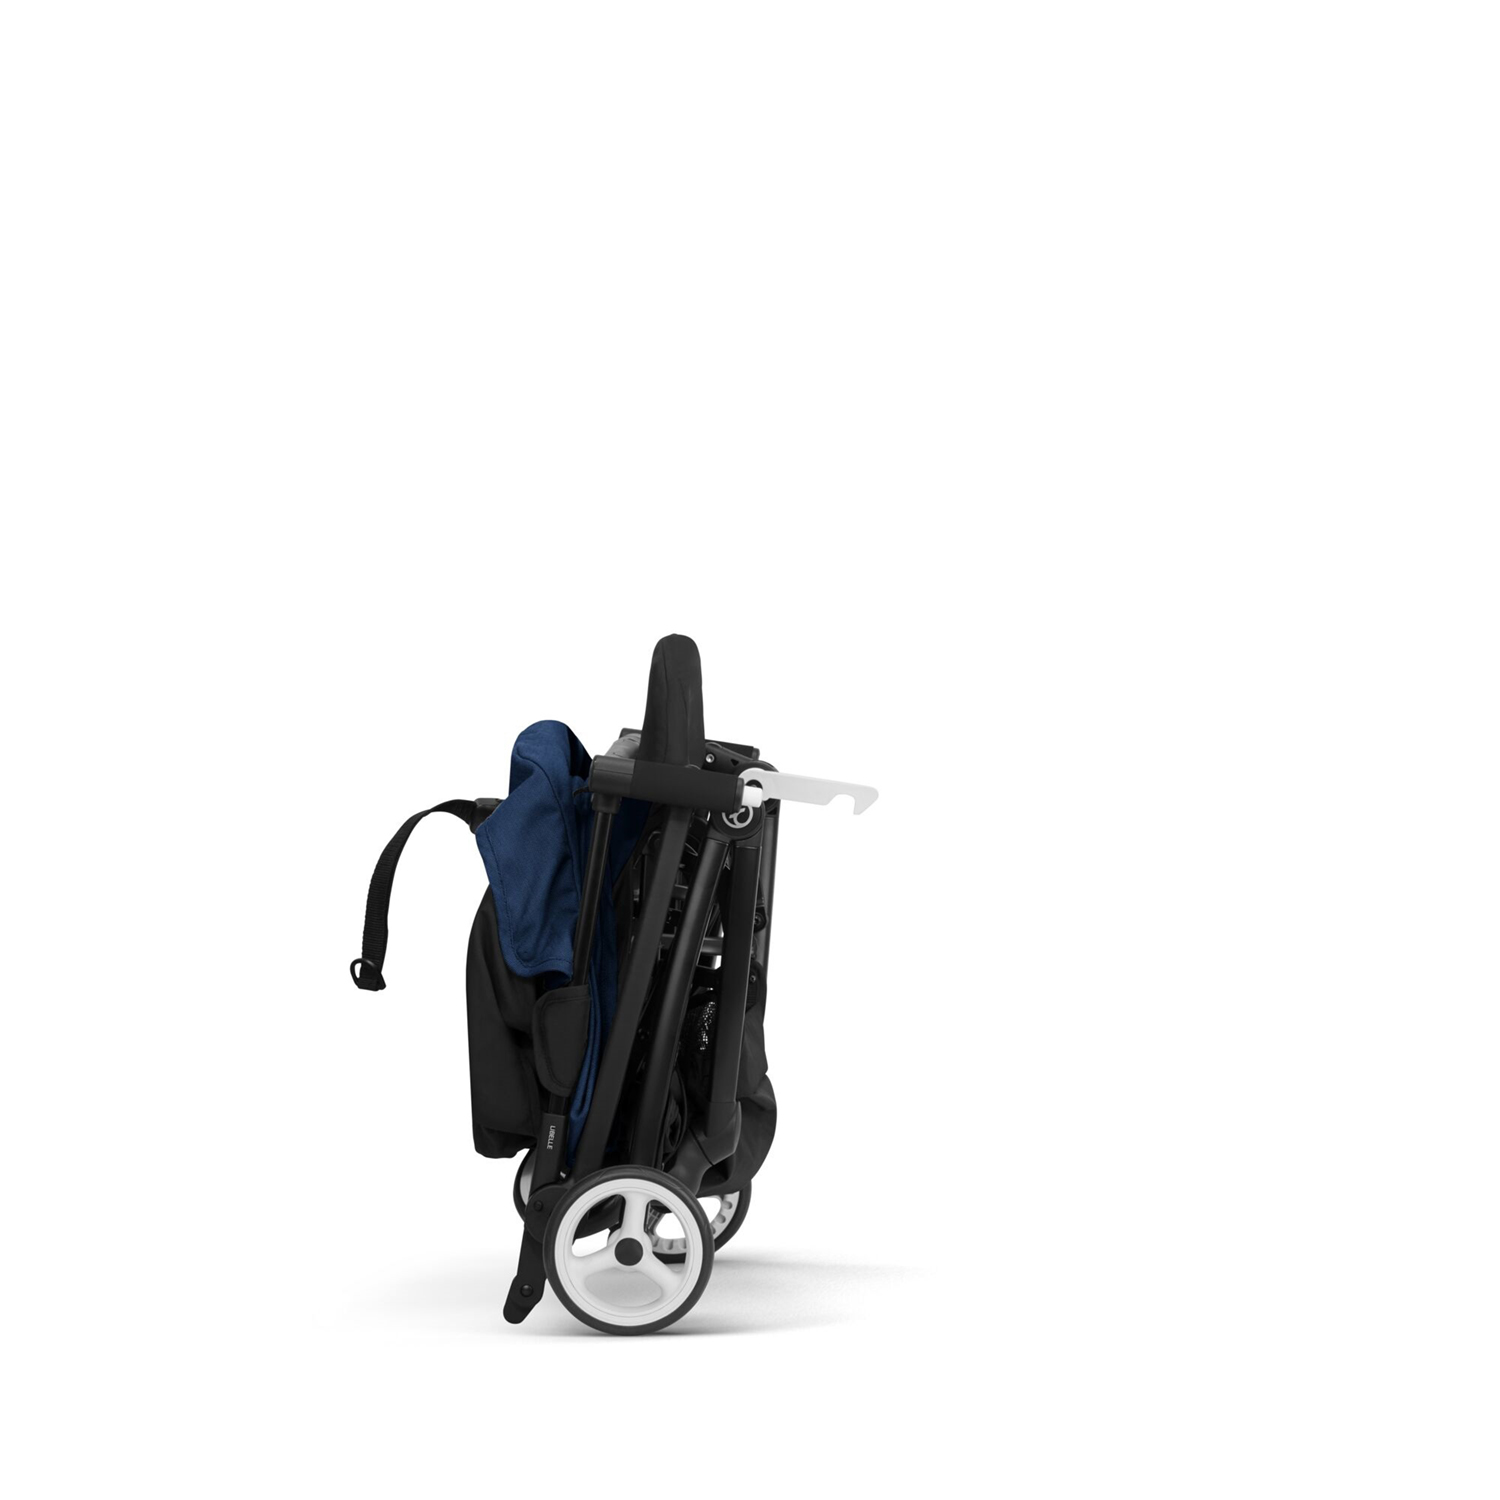 Детская коляска Cybex Libelle Navy Blue, цвет нет цвета - фото 6